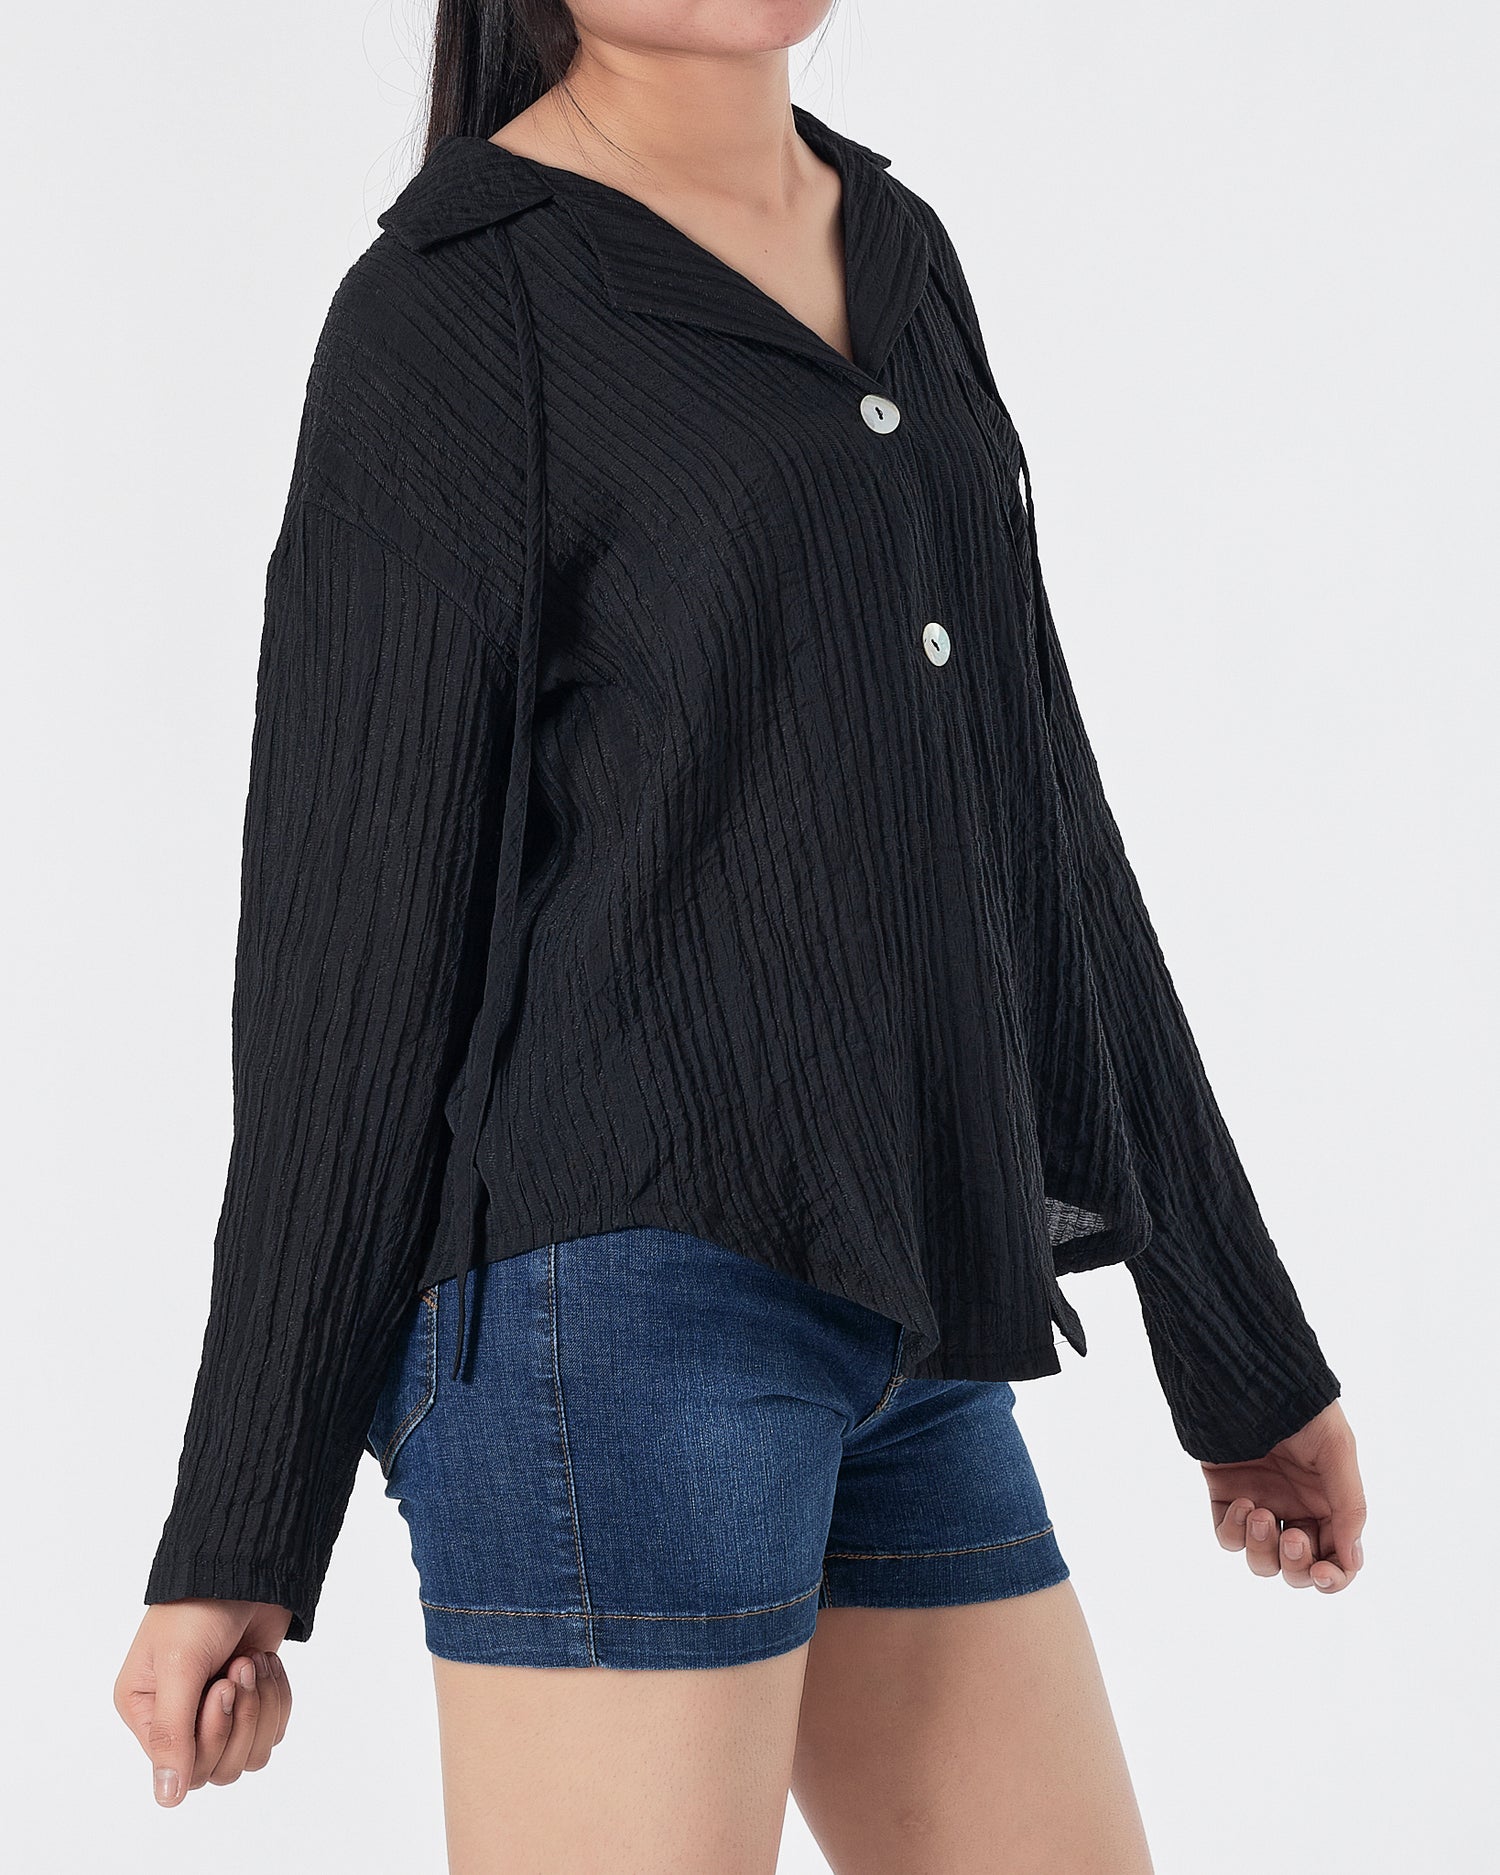 Plain Color Lady Black Shirts Long Sleeve 13.90